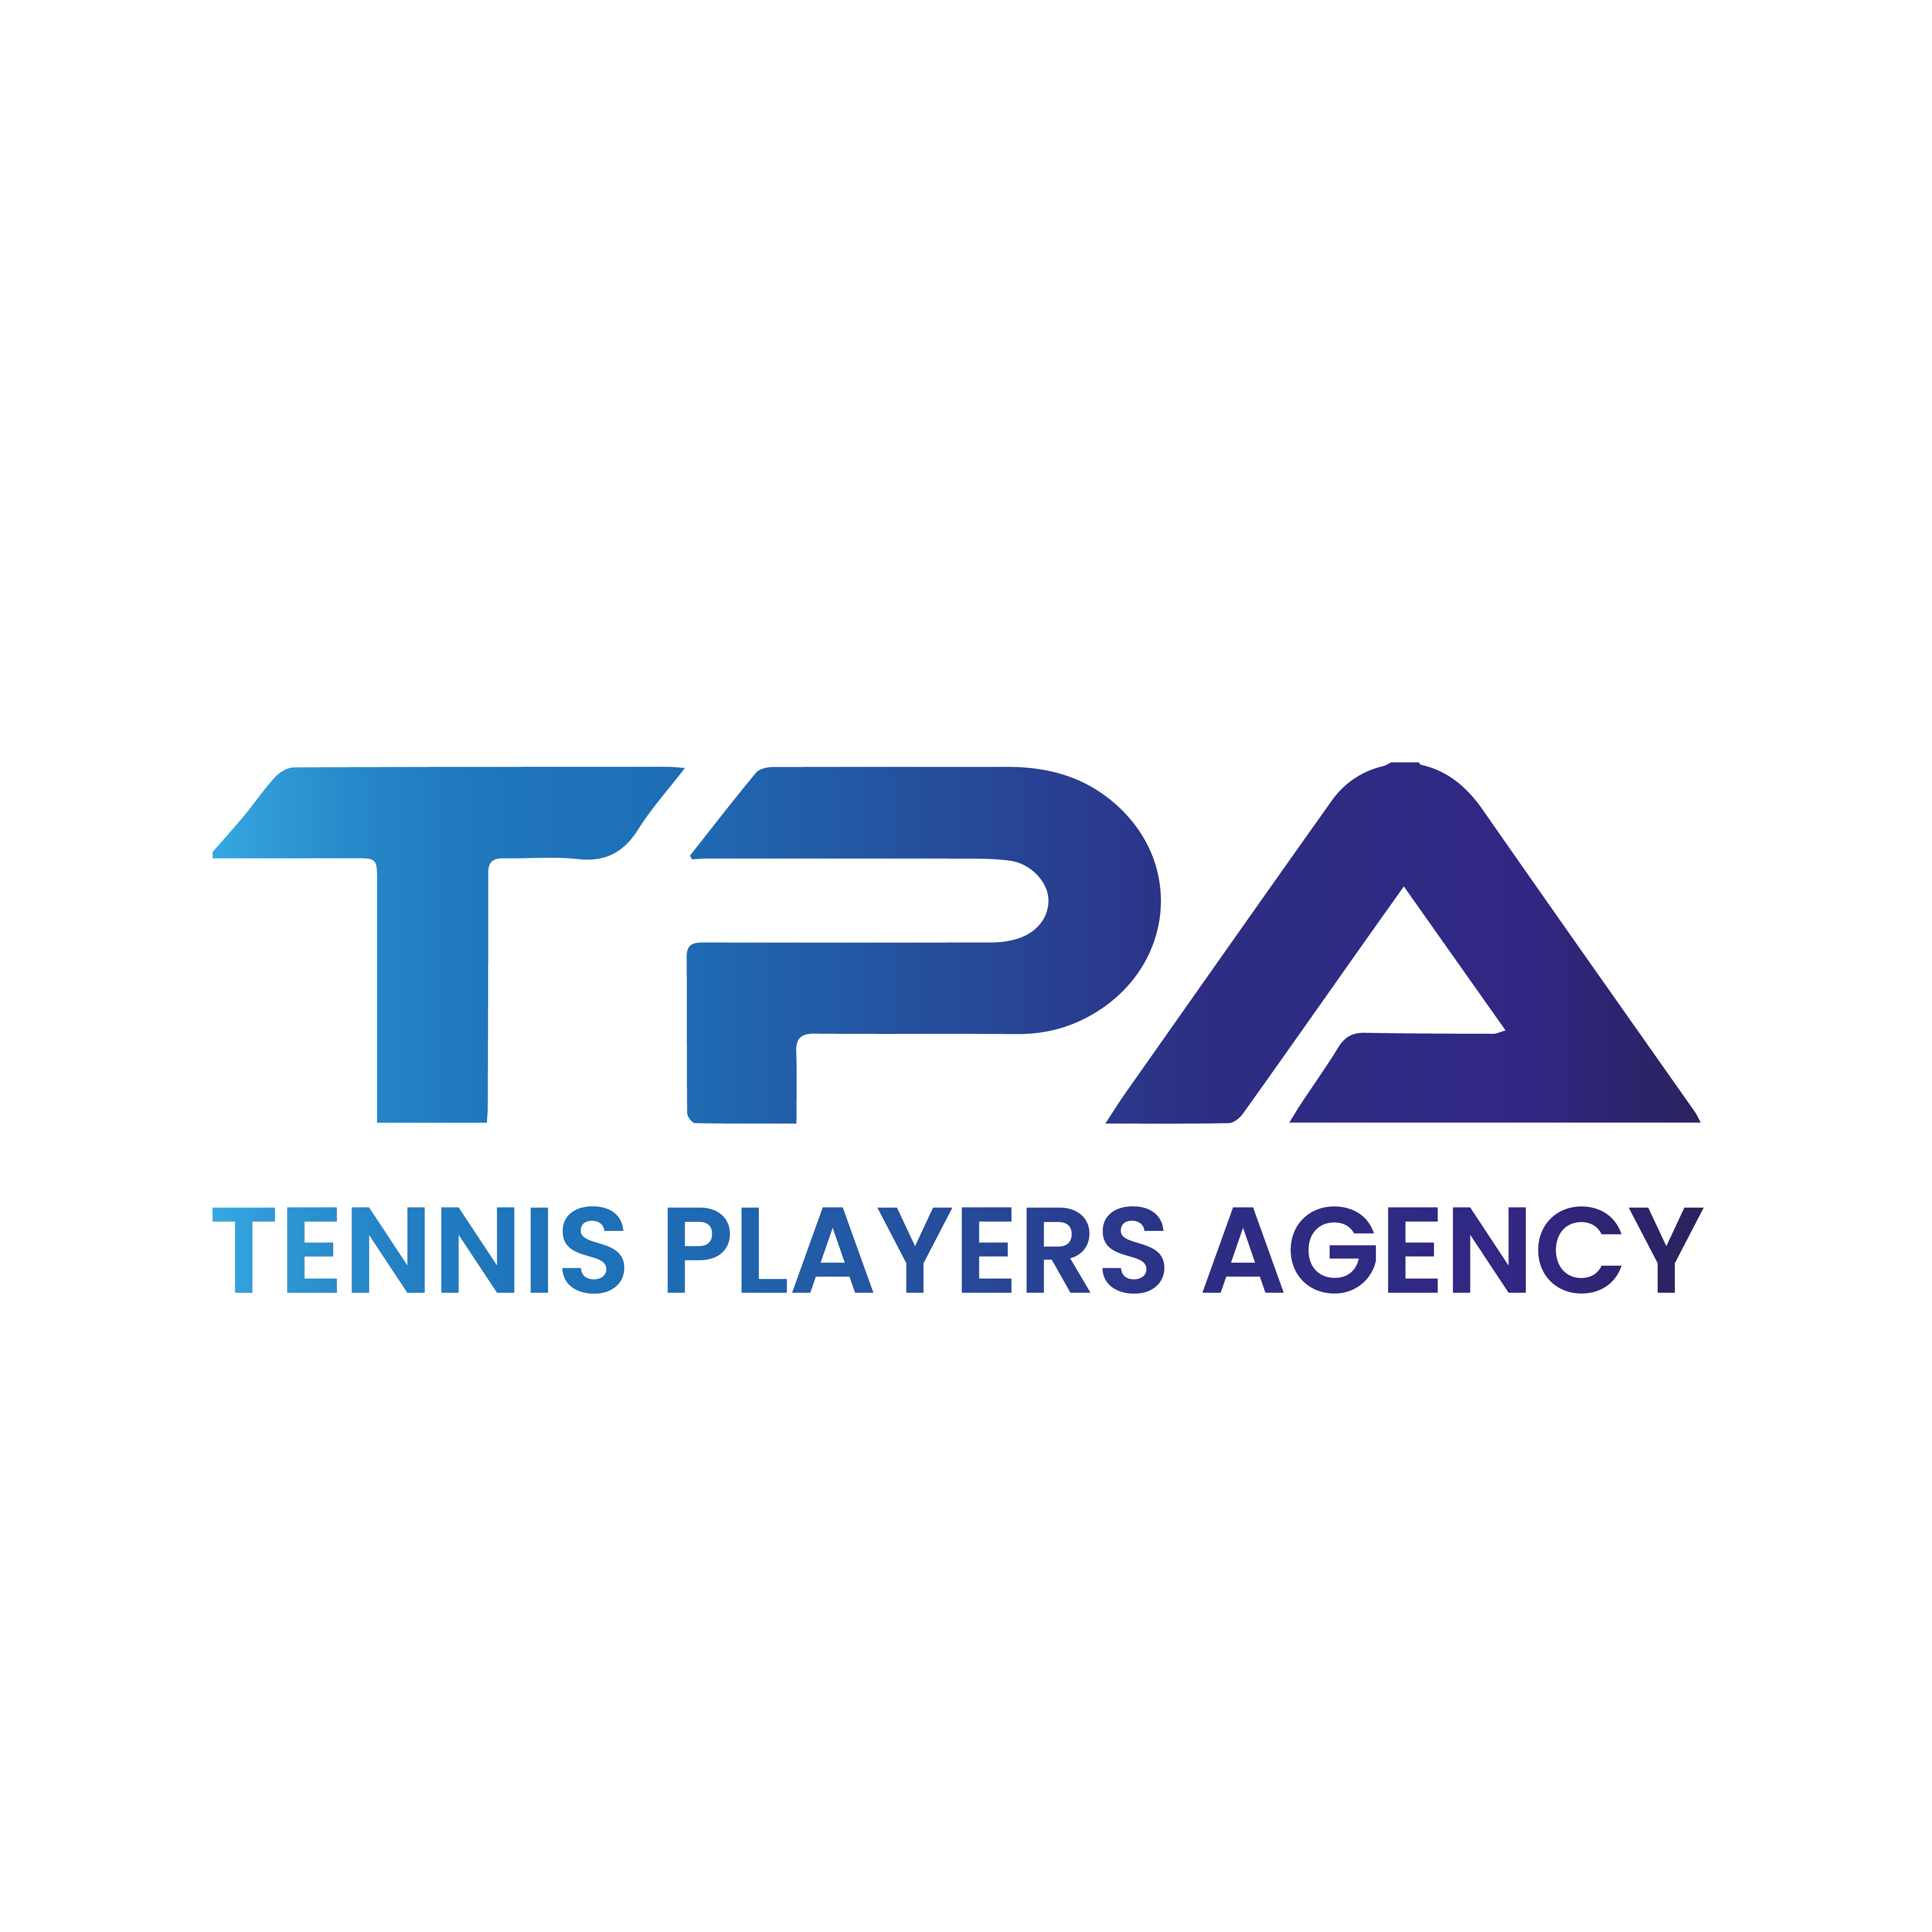 Tennis players agency logo